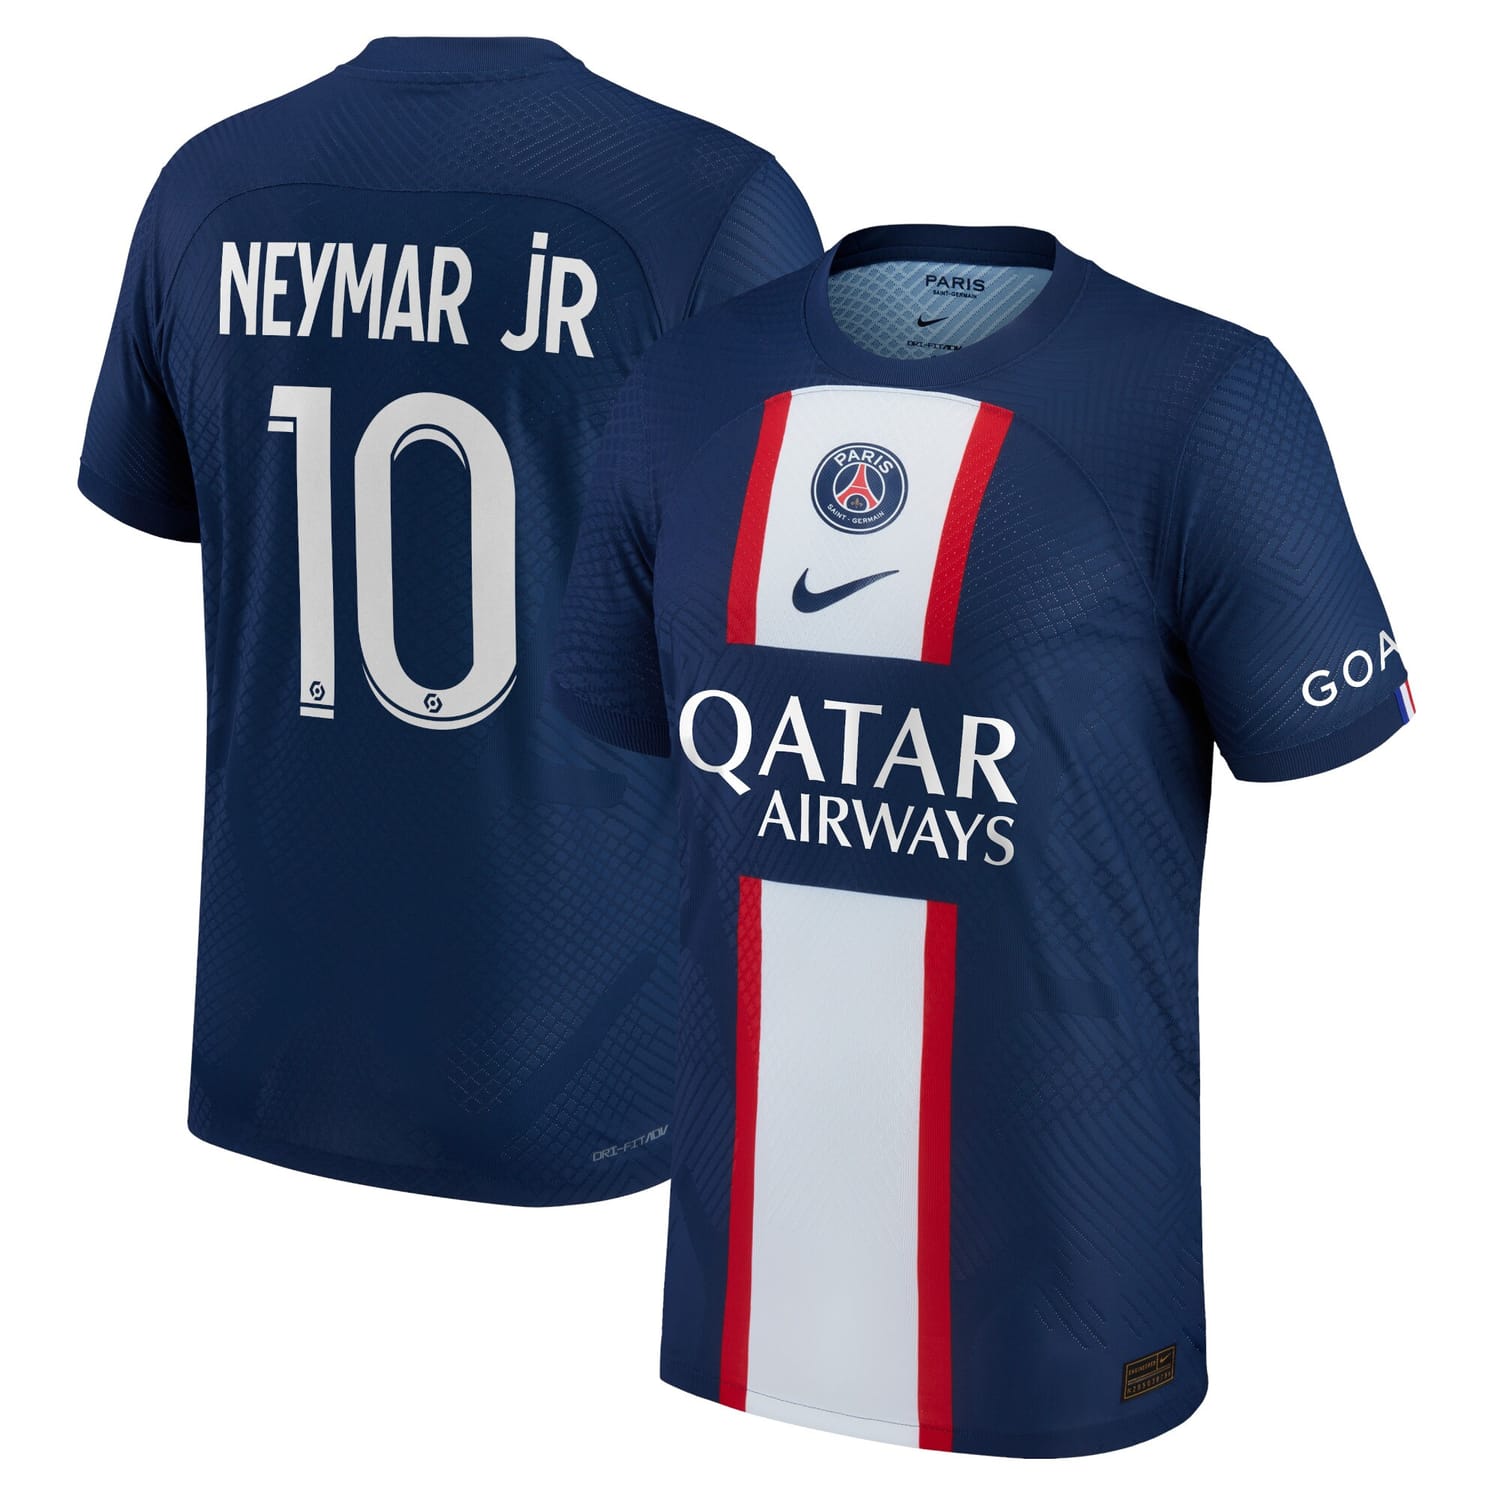 Ligue 1 Paris Saint-Germain Home Authentic Jersey Shirt 2022-23 player Neymar Jr. 10 printing for Men